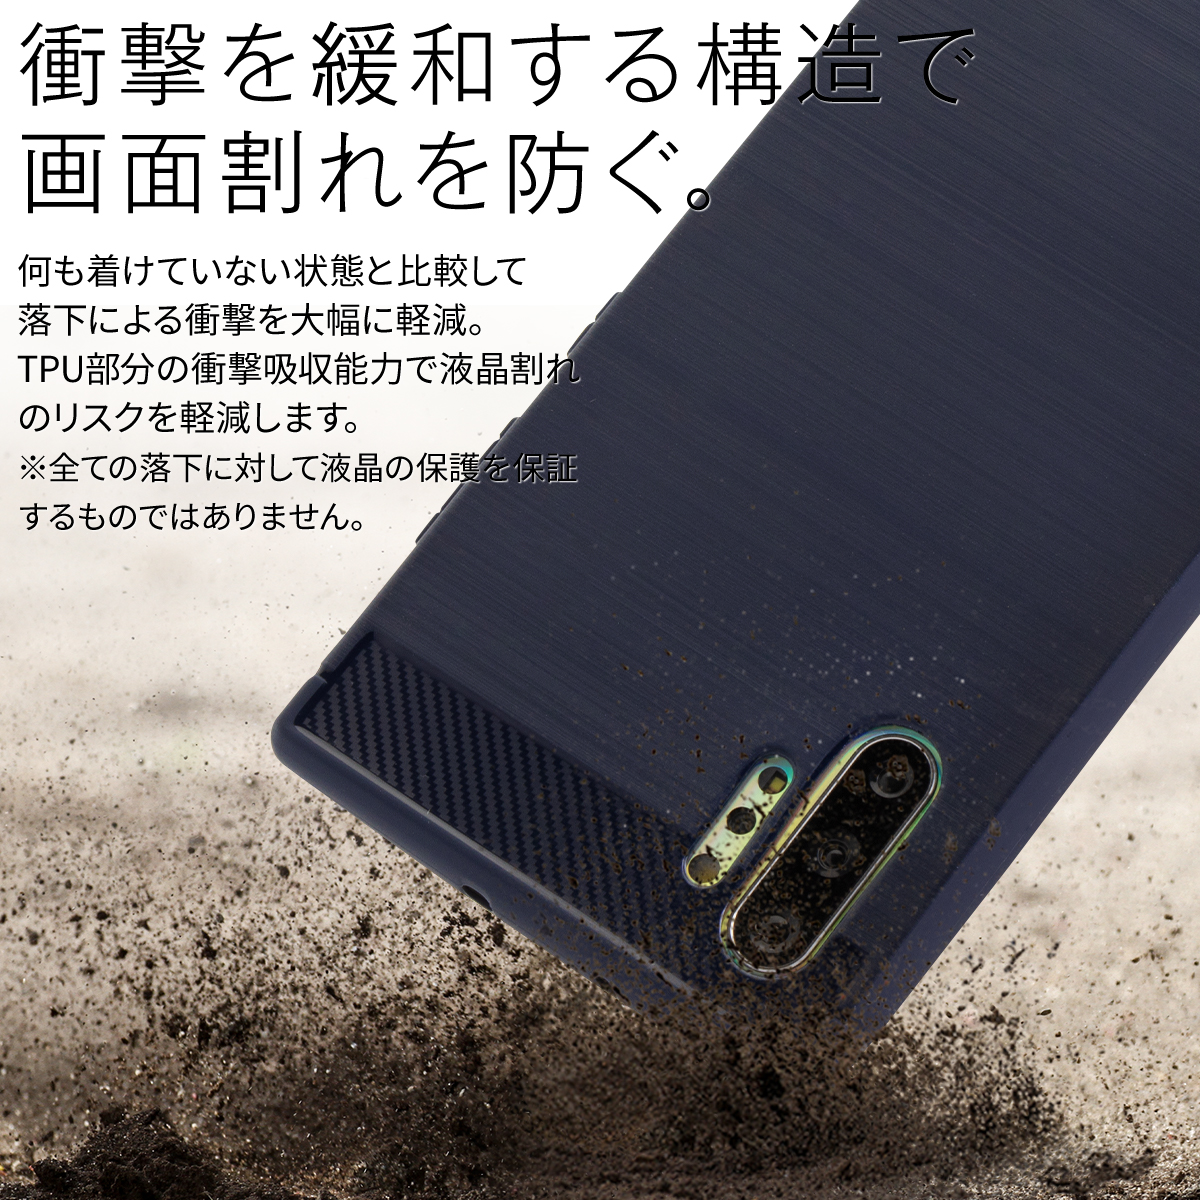 Galaxy Note10+ SC-01M SCV45 カーボン調TPUケース